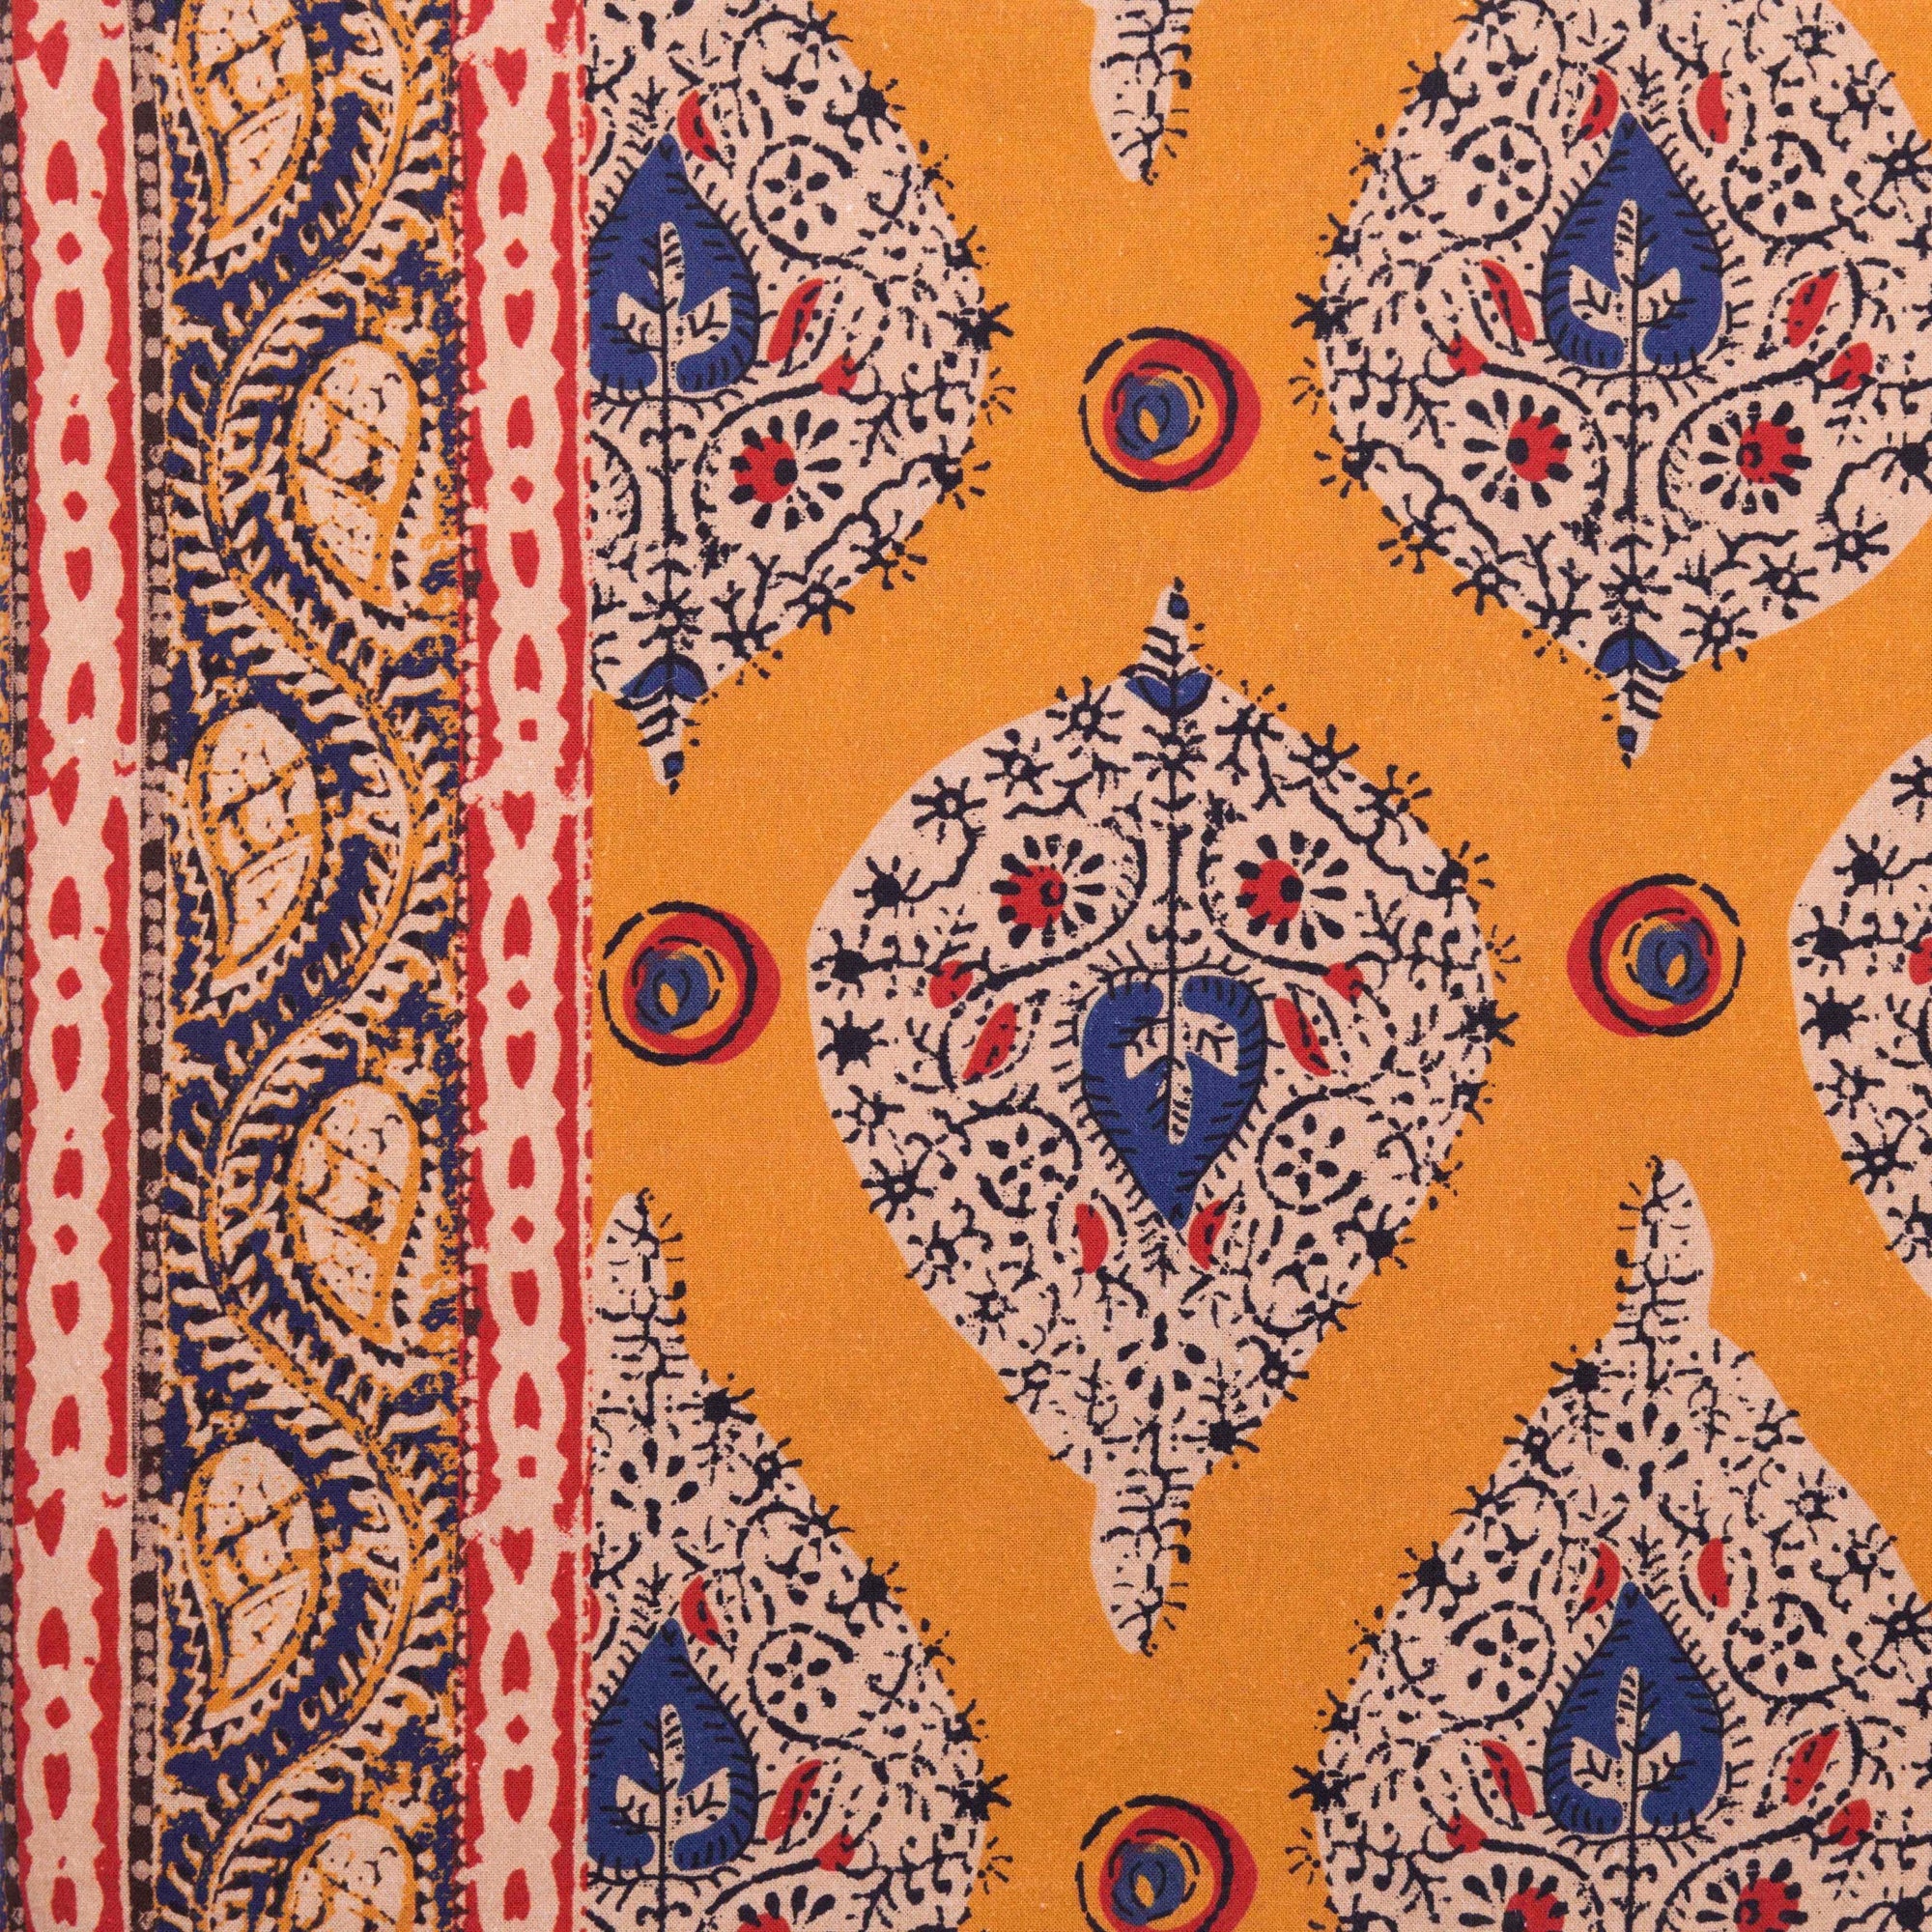 Patnam kalam/Table cloth - mitta haldi